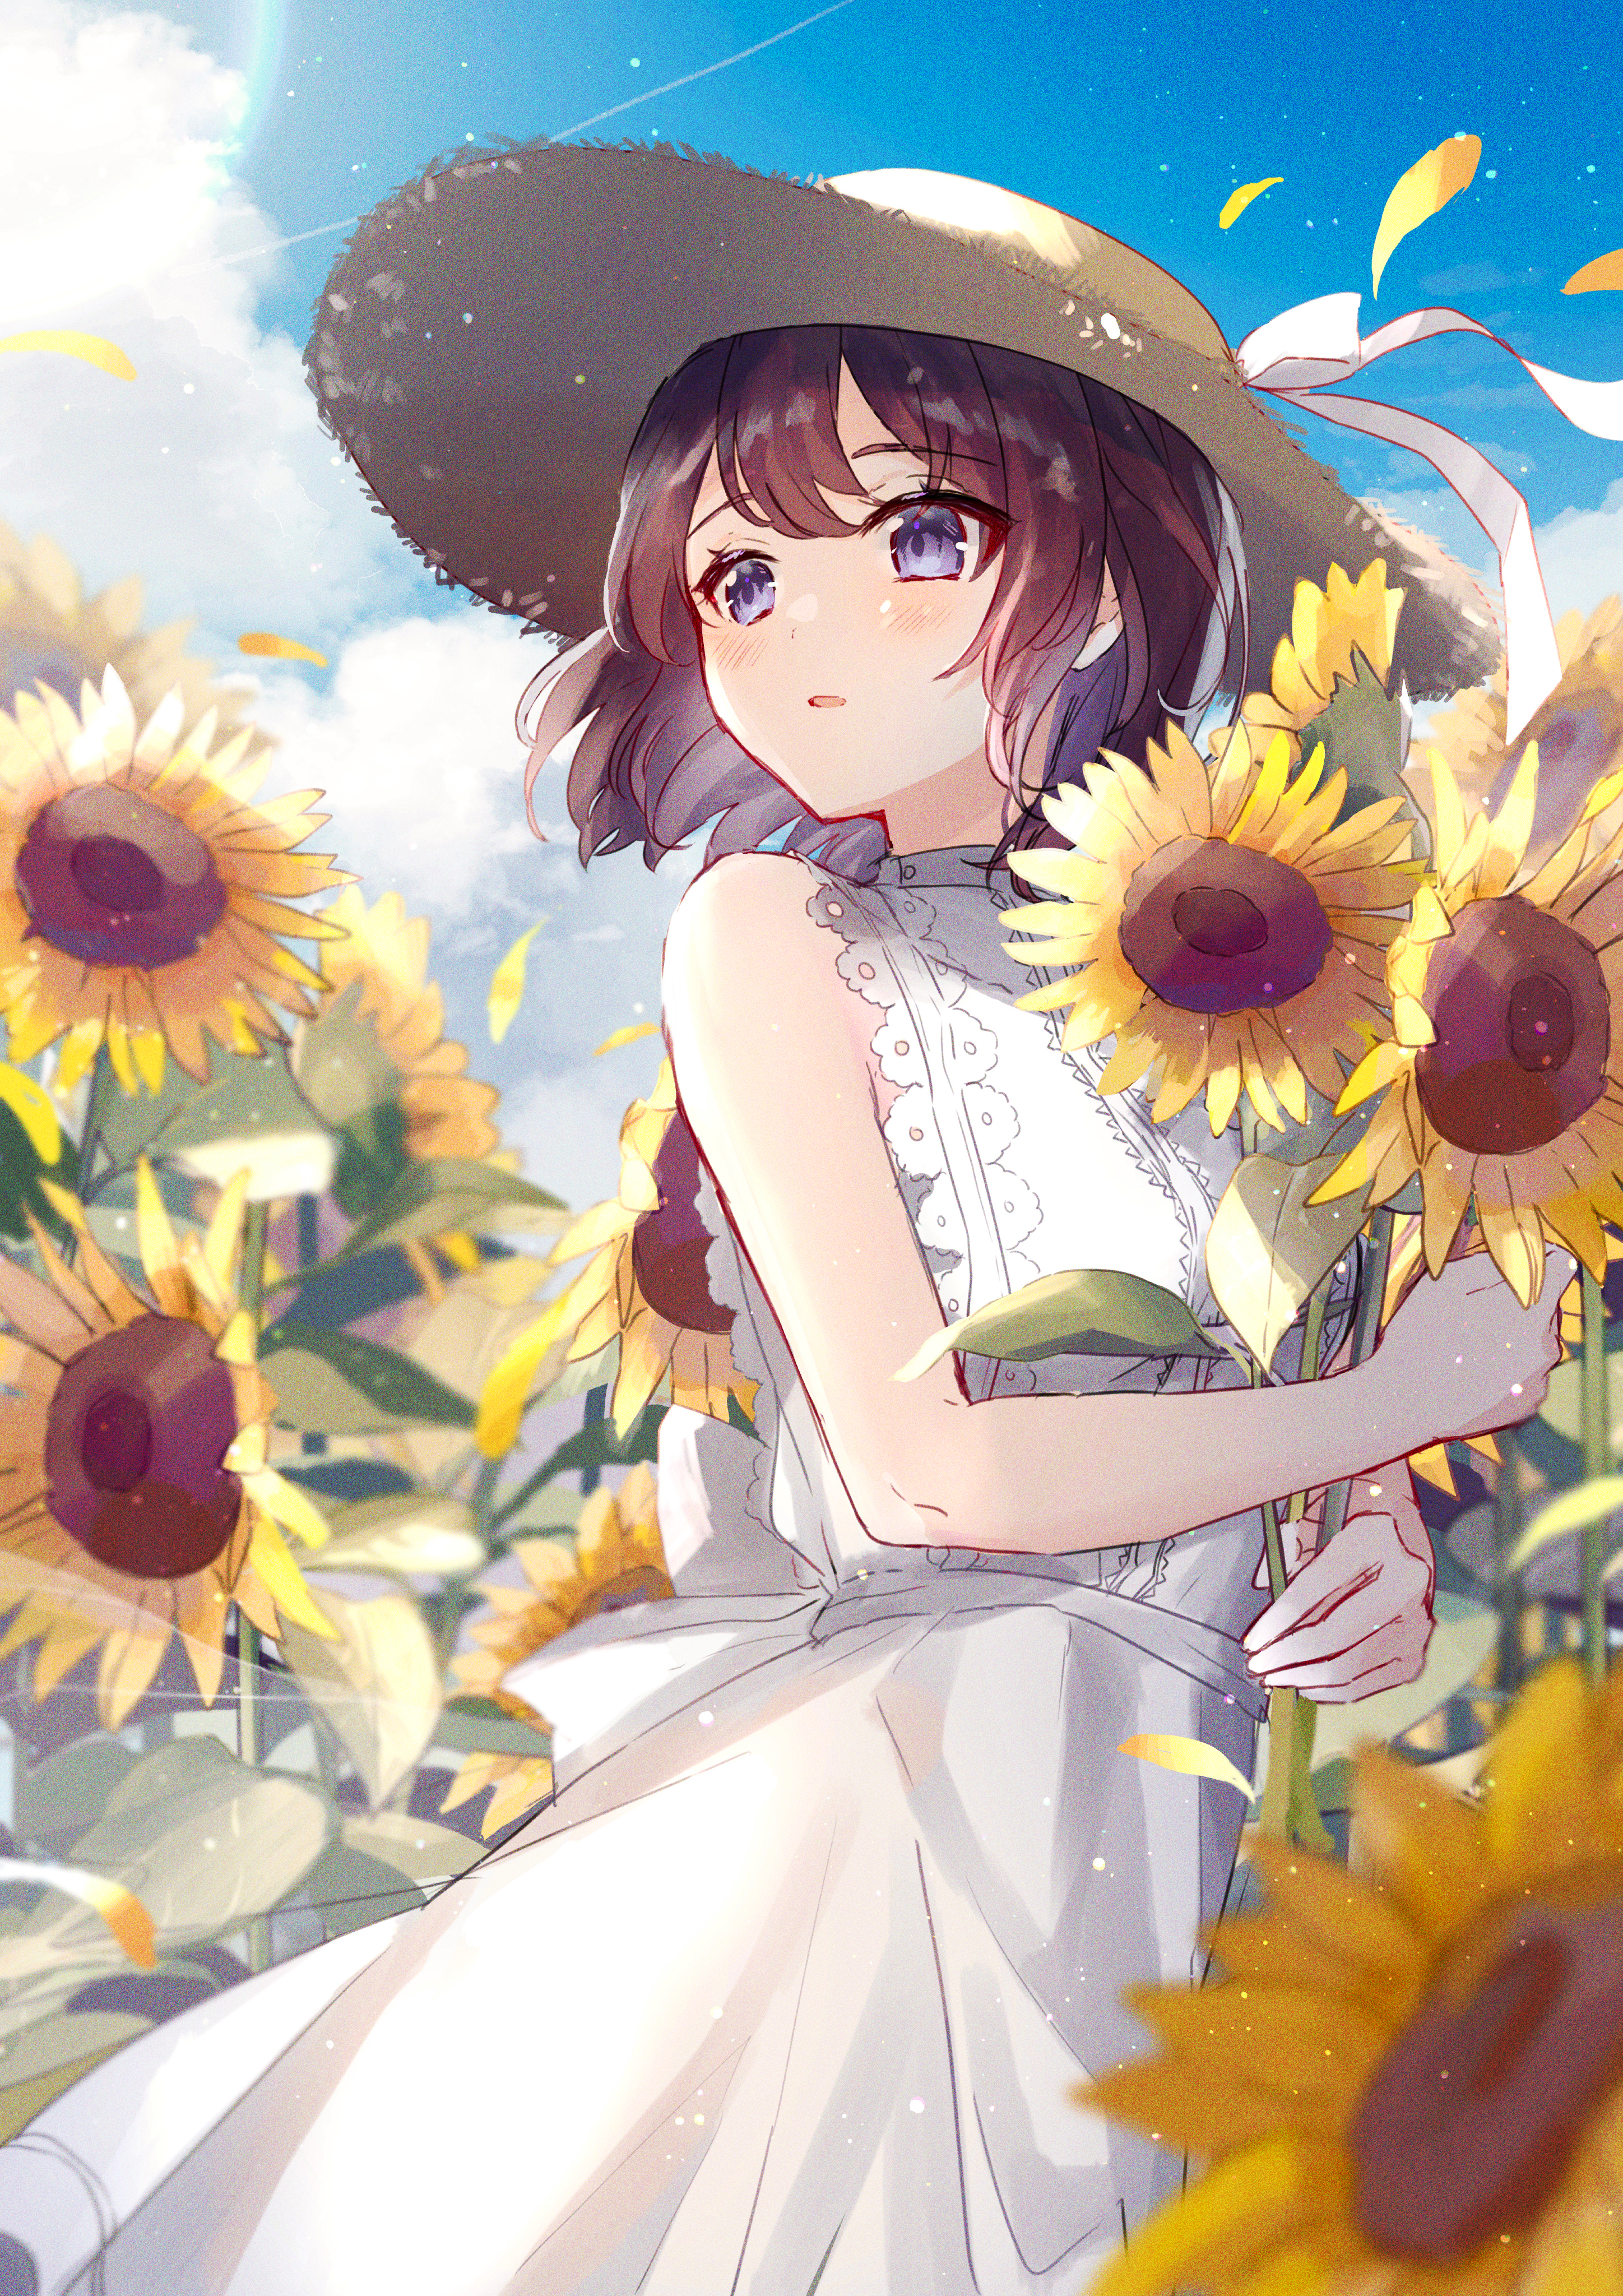 Anime 2896x4096 anime anime girls Oyuyu sunflowers straw hat sun dress brunette purple eyes